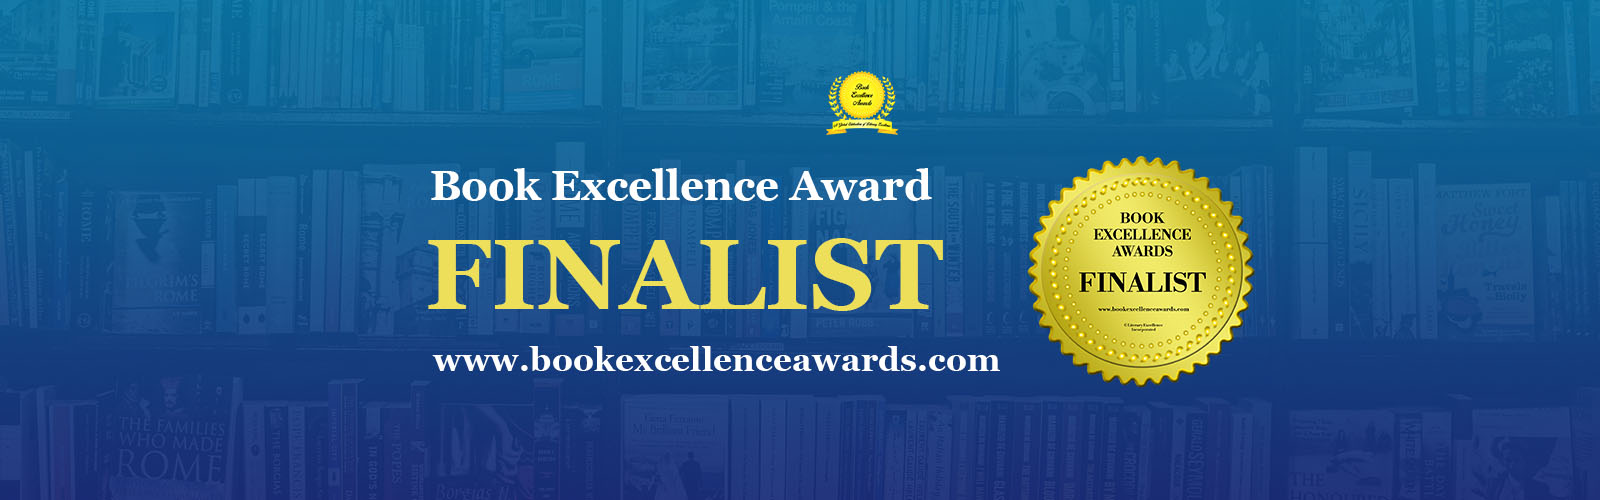 Book-Excellence-Award-Finalist-Website-Hero-Image-1600x500